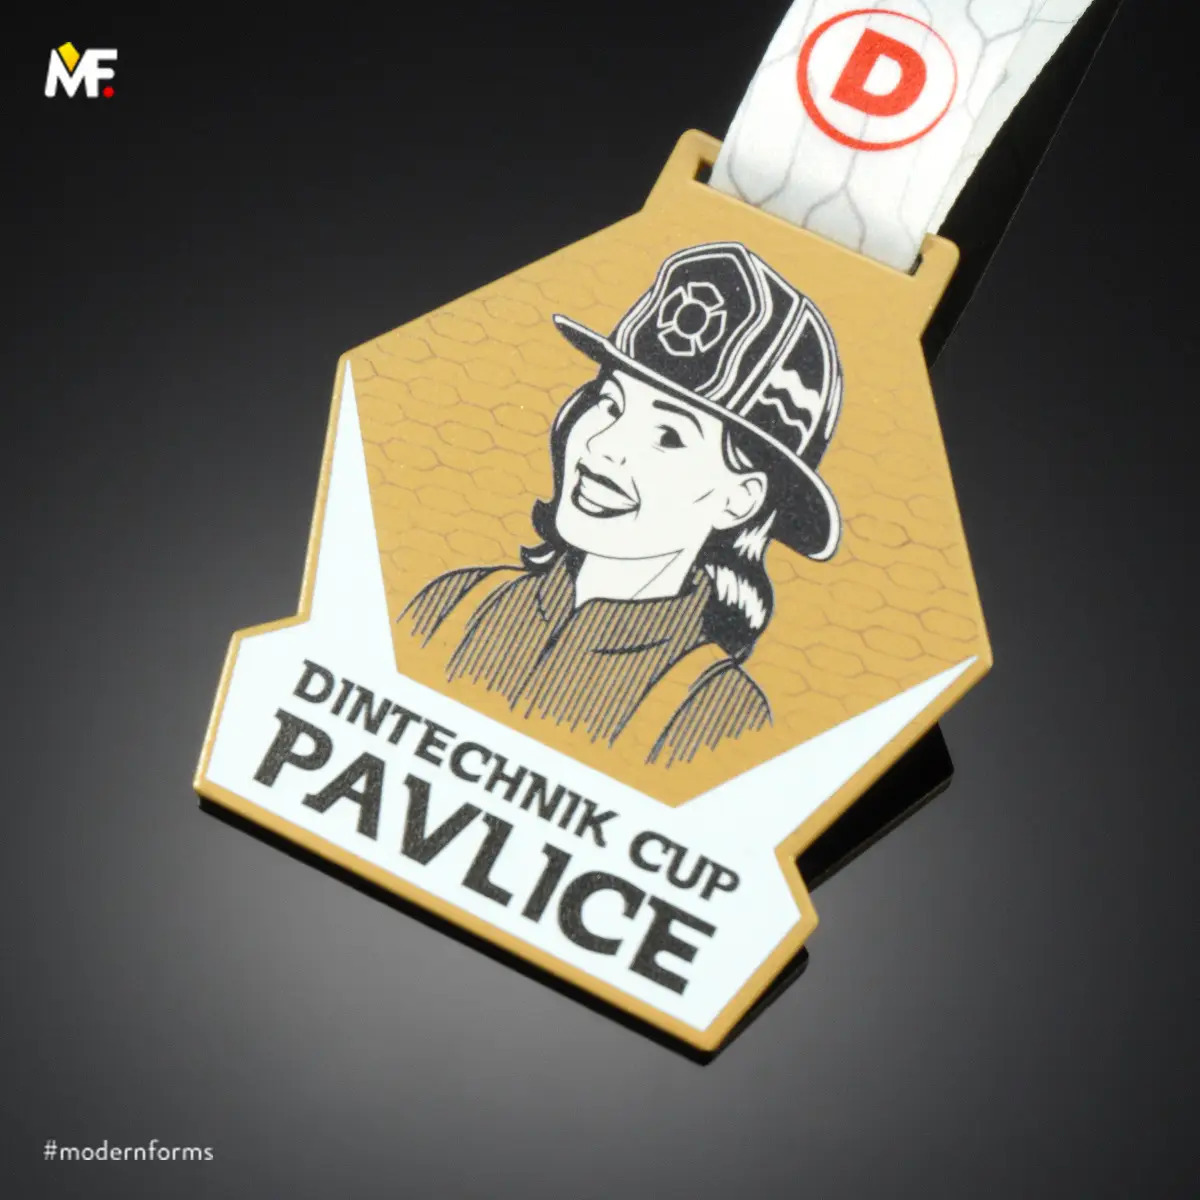 medale i oznaczenia strażackie